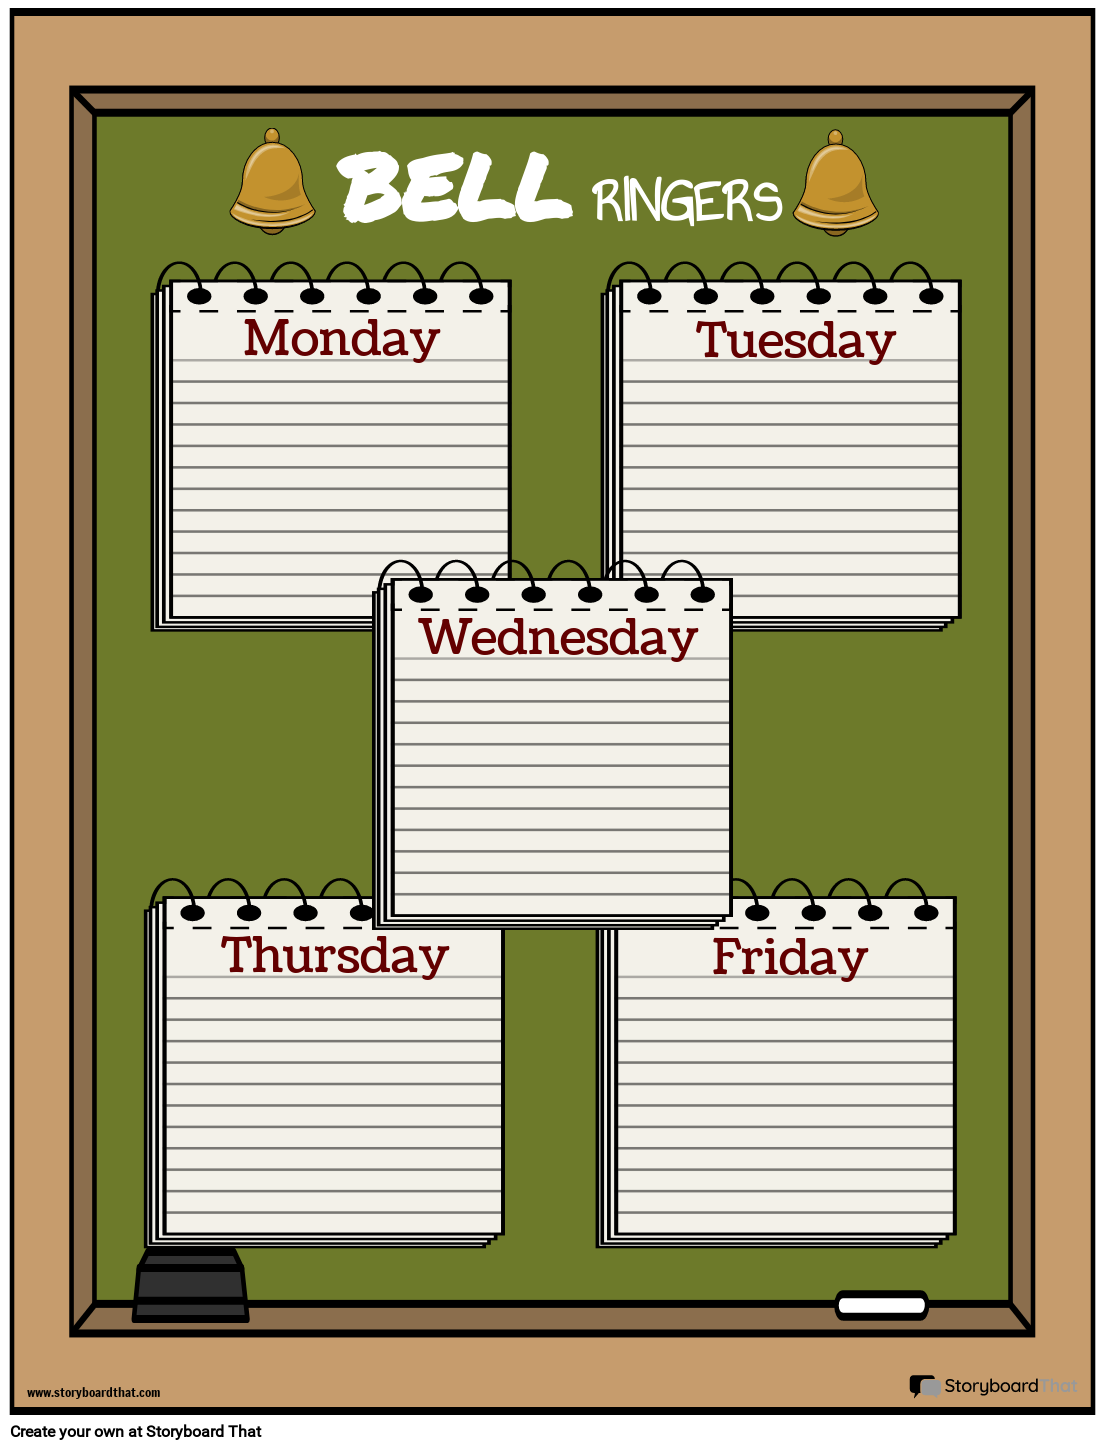 Bell Ringers Reminder Board